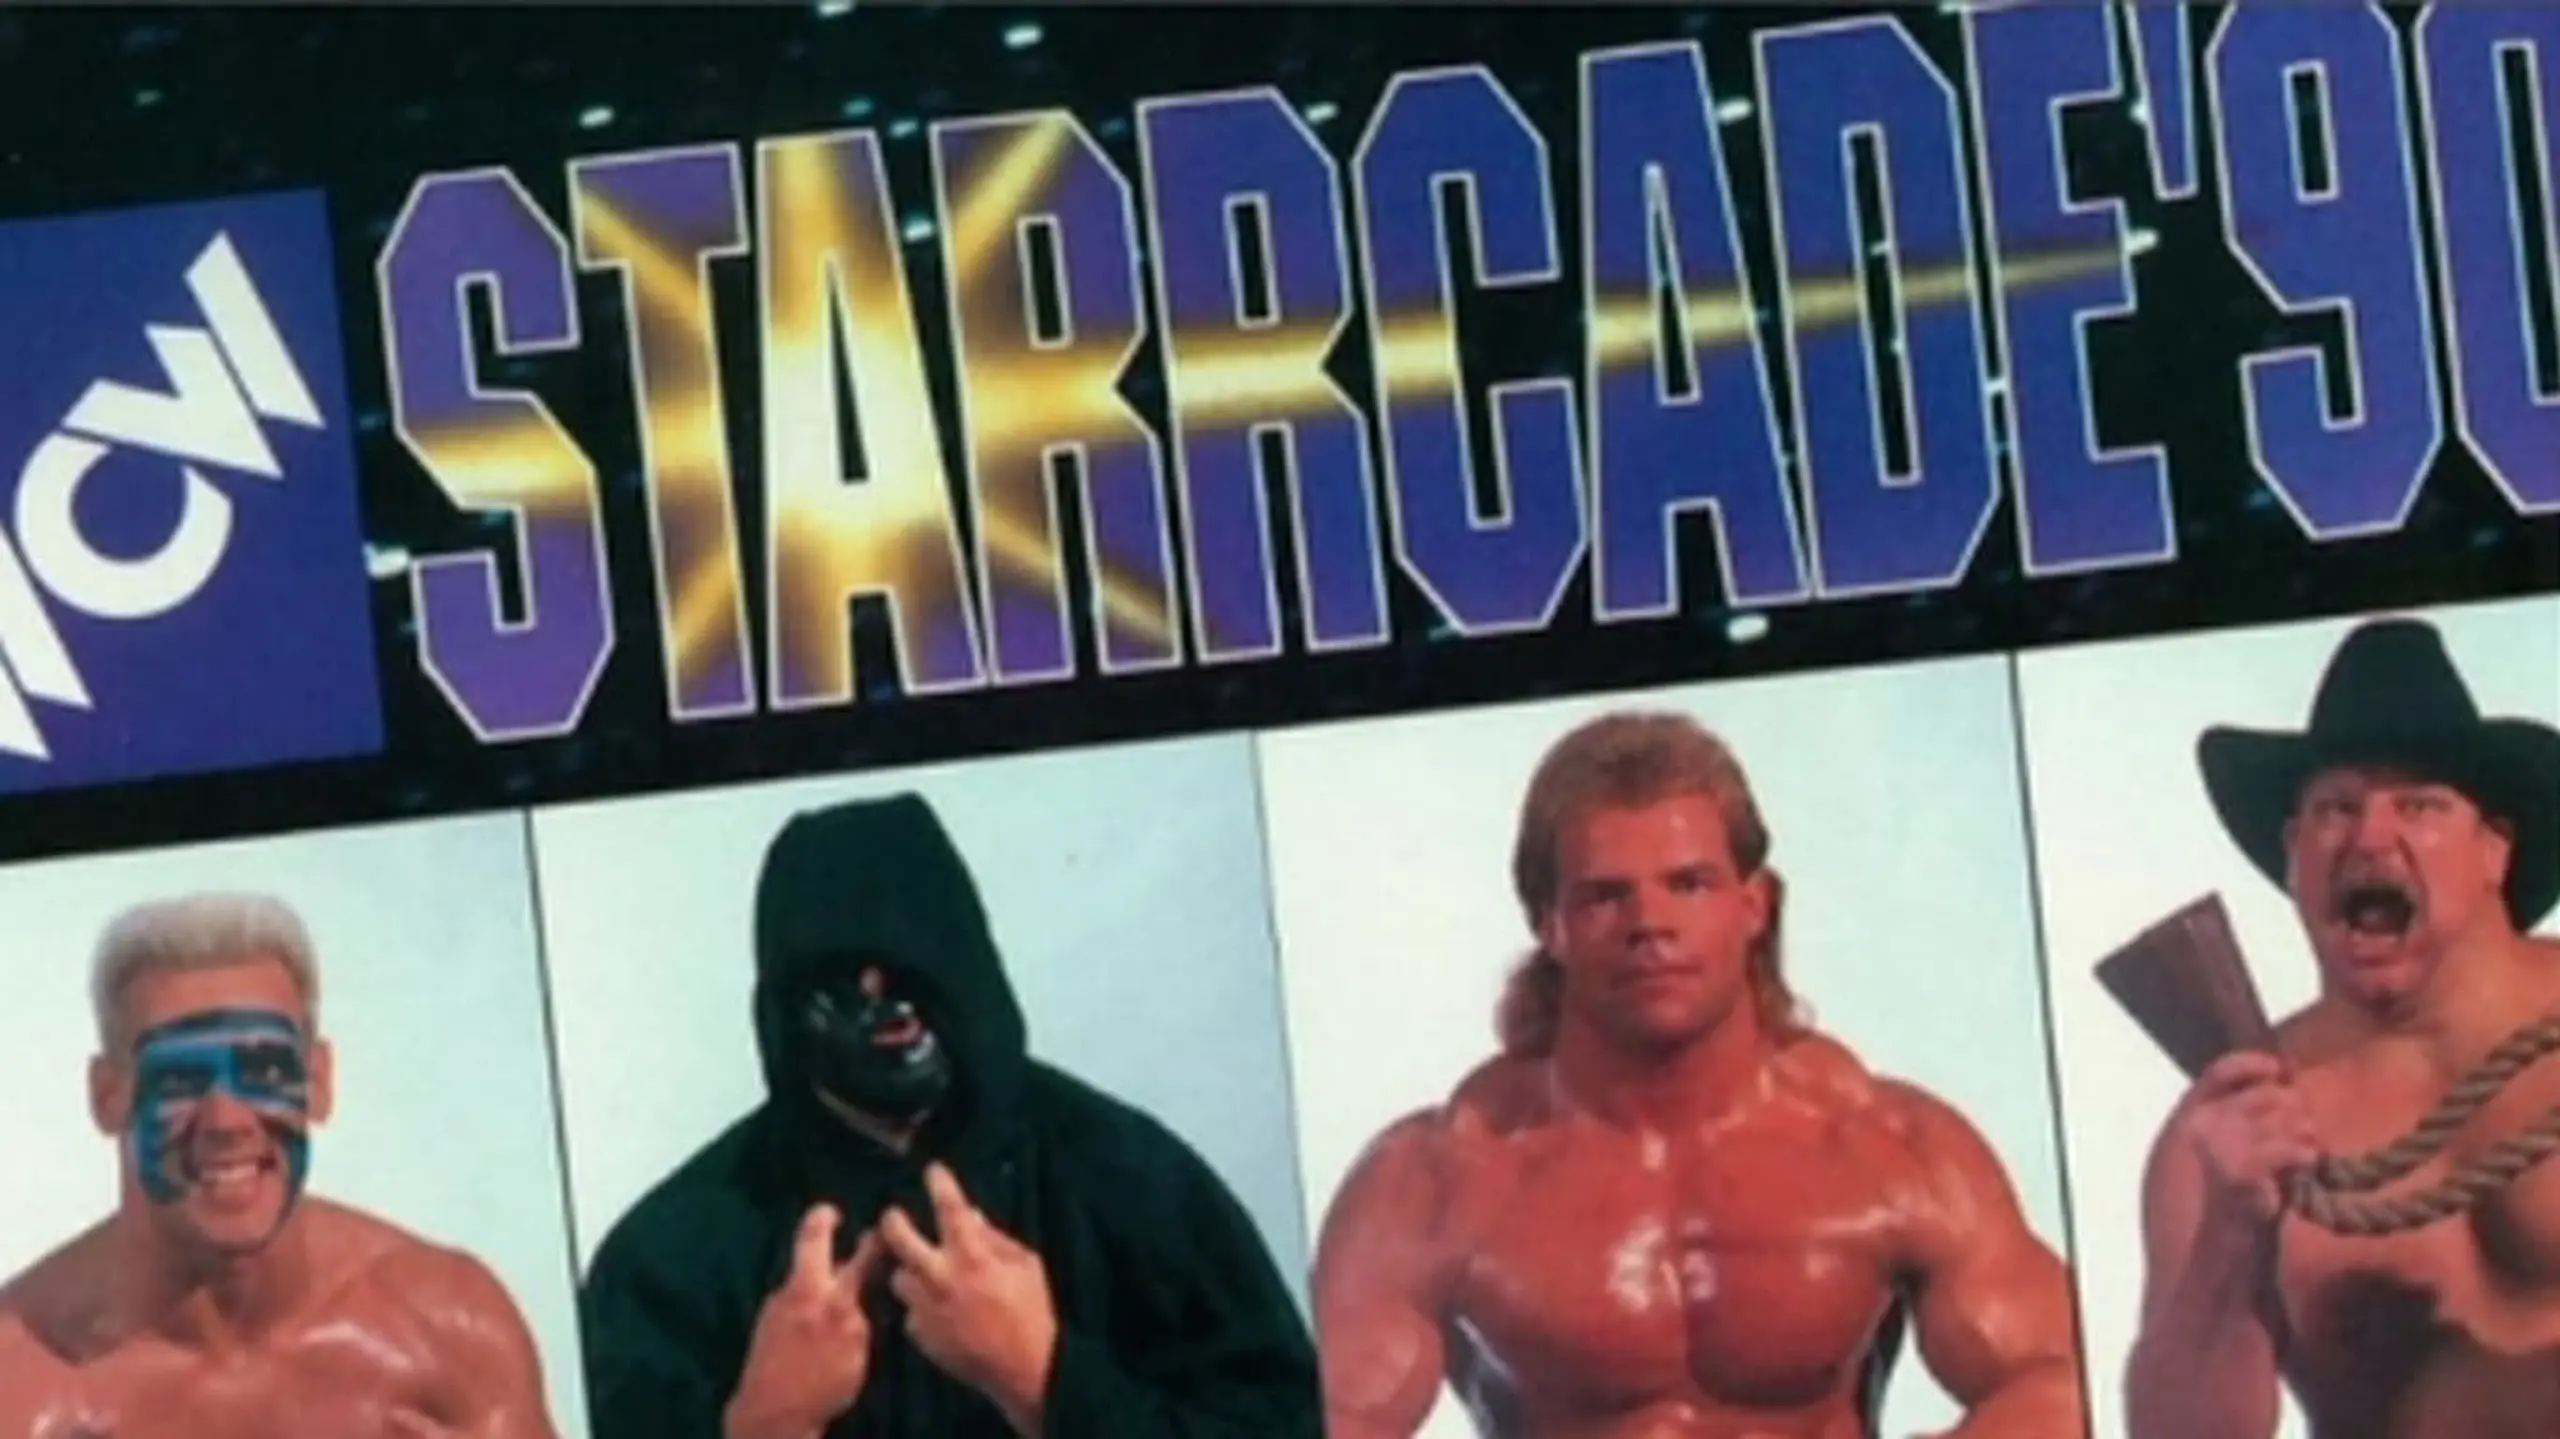 WCW Starrcade '90: Collision Course